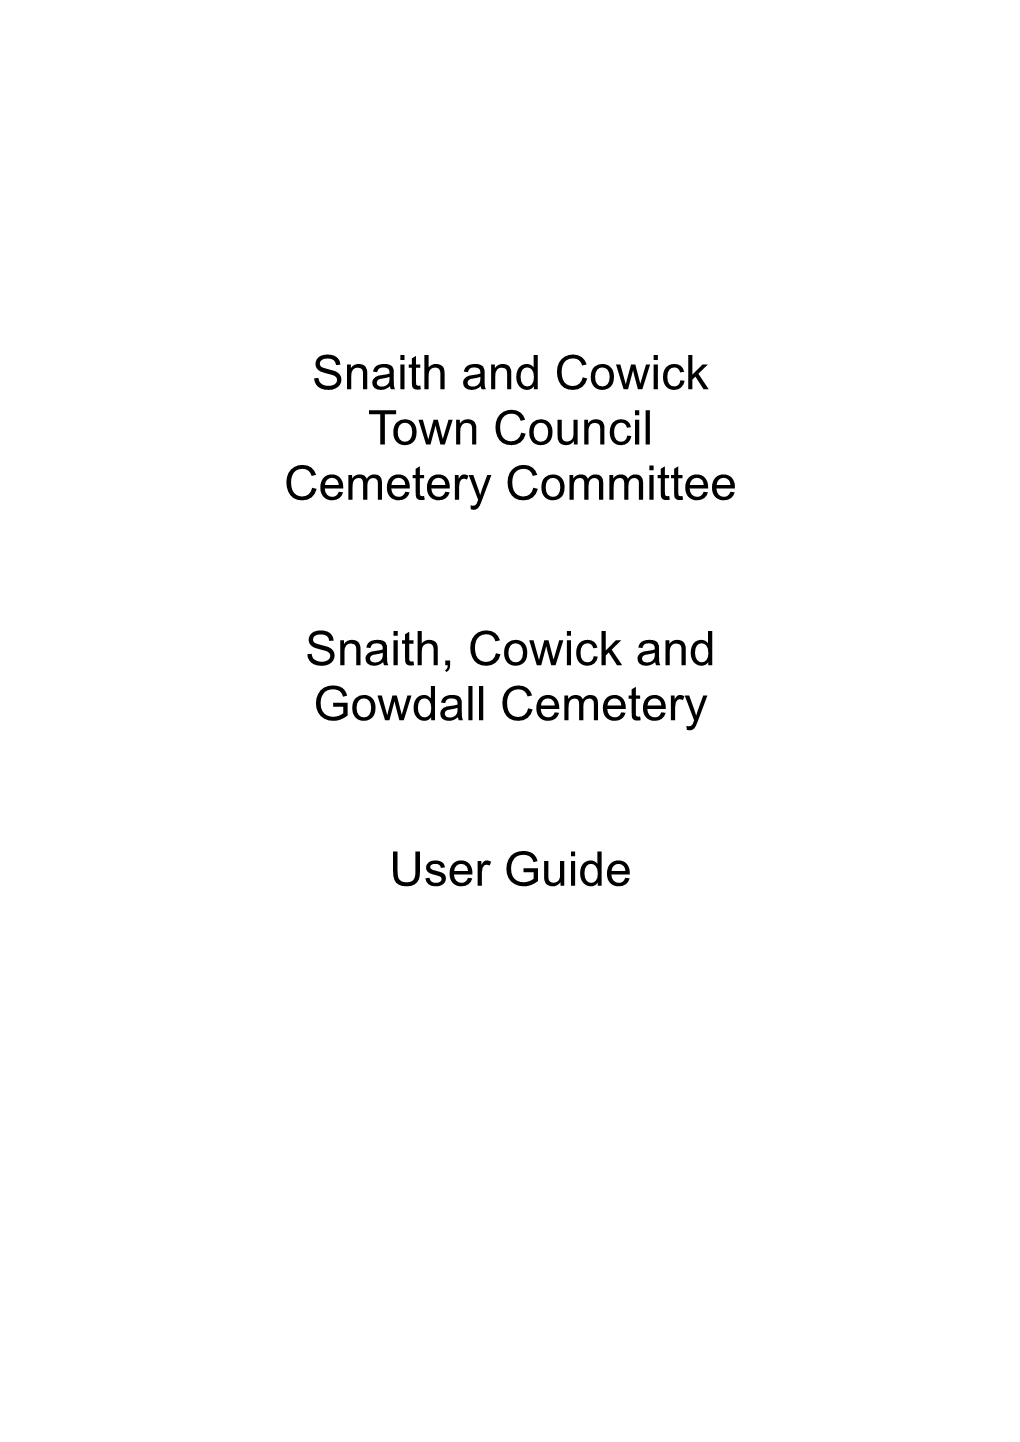 Snaith and Cowick Town Council Cemetery Committee Snaith